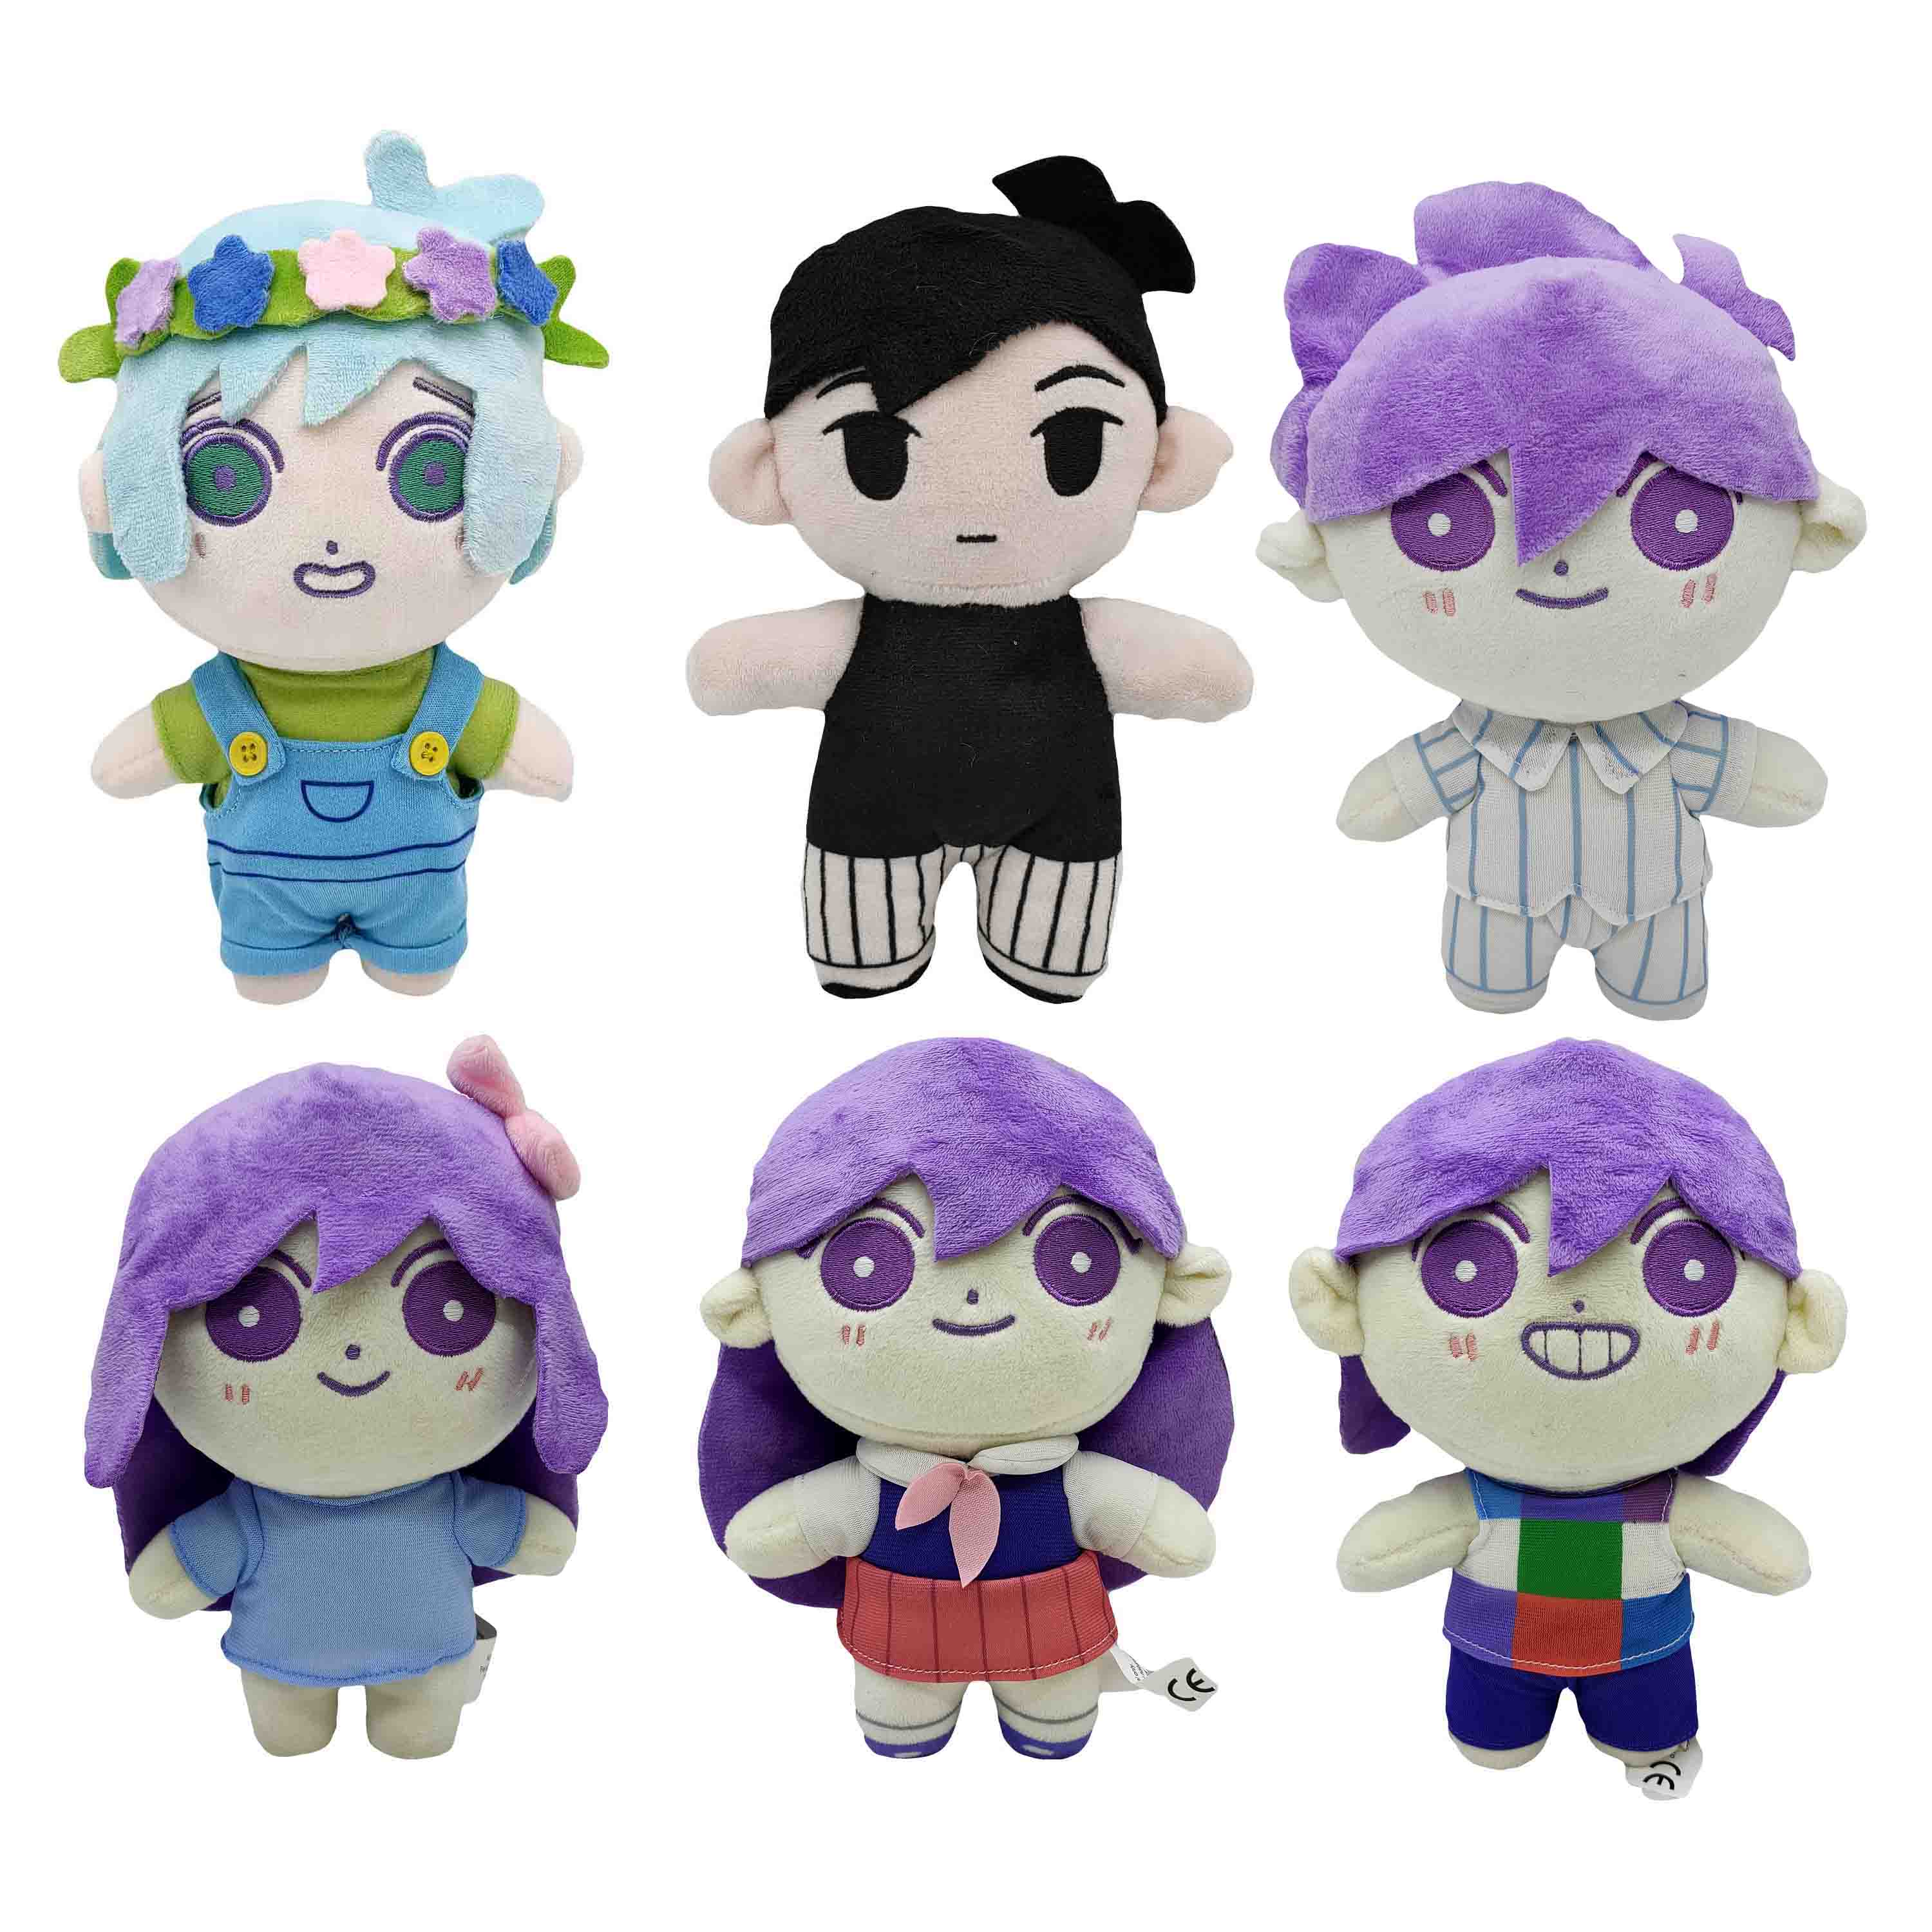 New Omori Plush Toys Cartoon Games Peripheral Dolls Purple Stuffed Plush Dolls Holiday Gift Collection Dolls - Omori Store